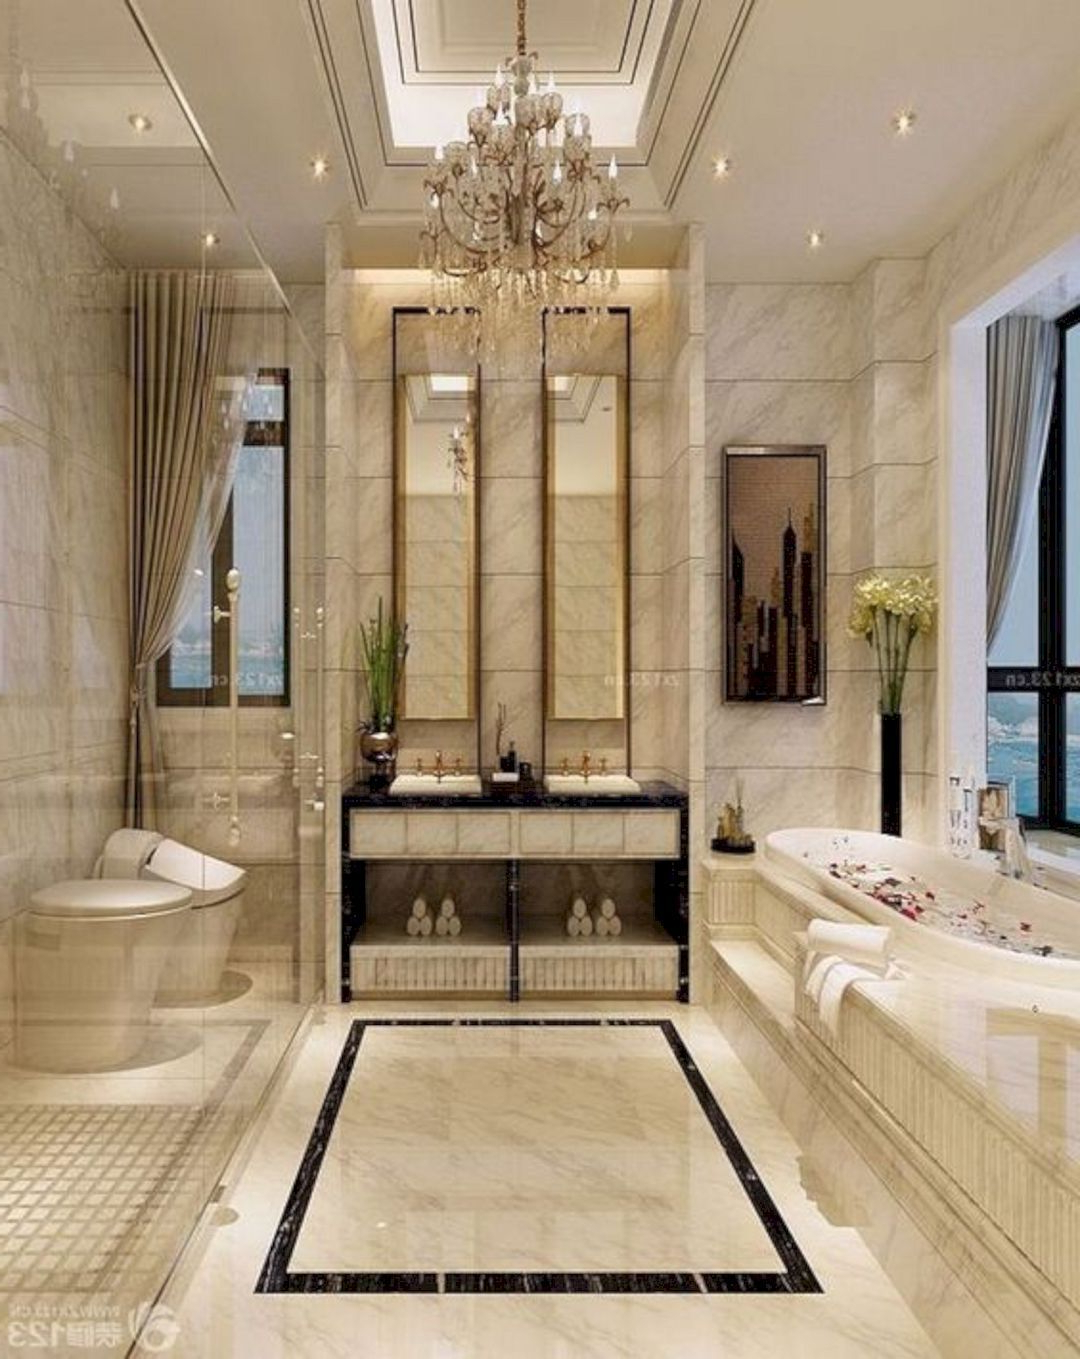 15 Elegant Bathroom Ideas To Steal Bathroom Design